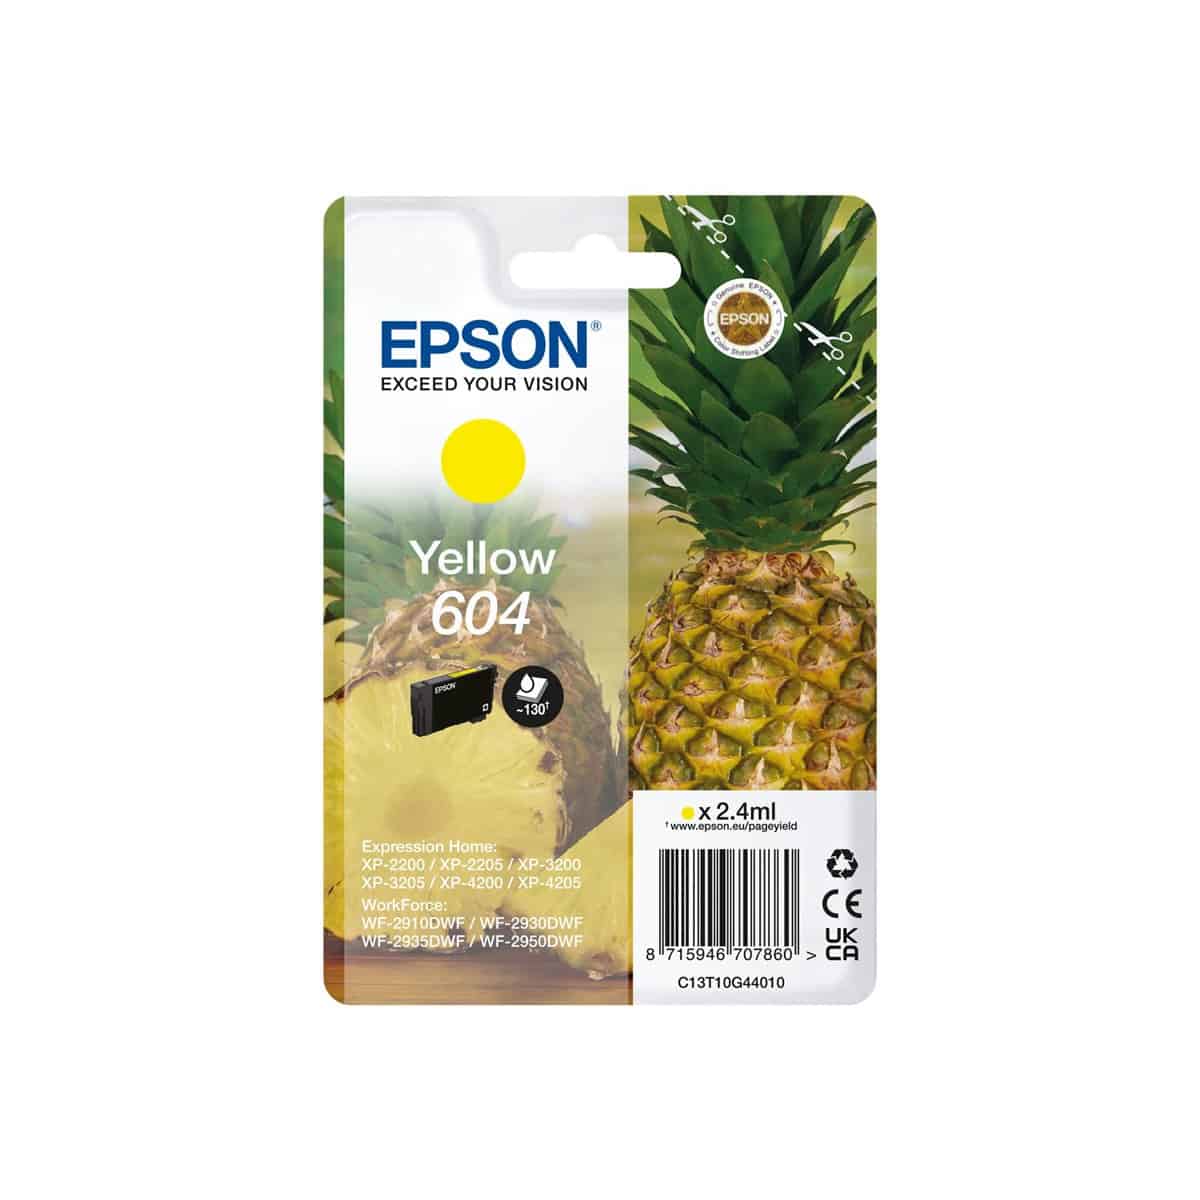 604 Y Cartouche Epson C13T10G44010 - Jaune - Ananas